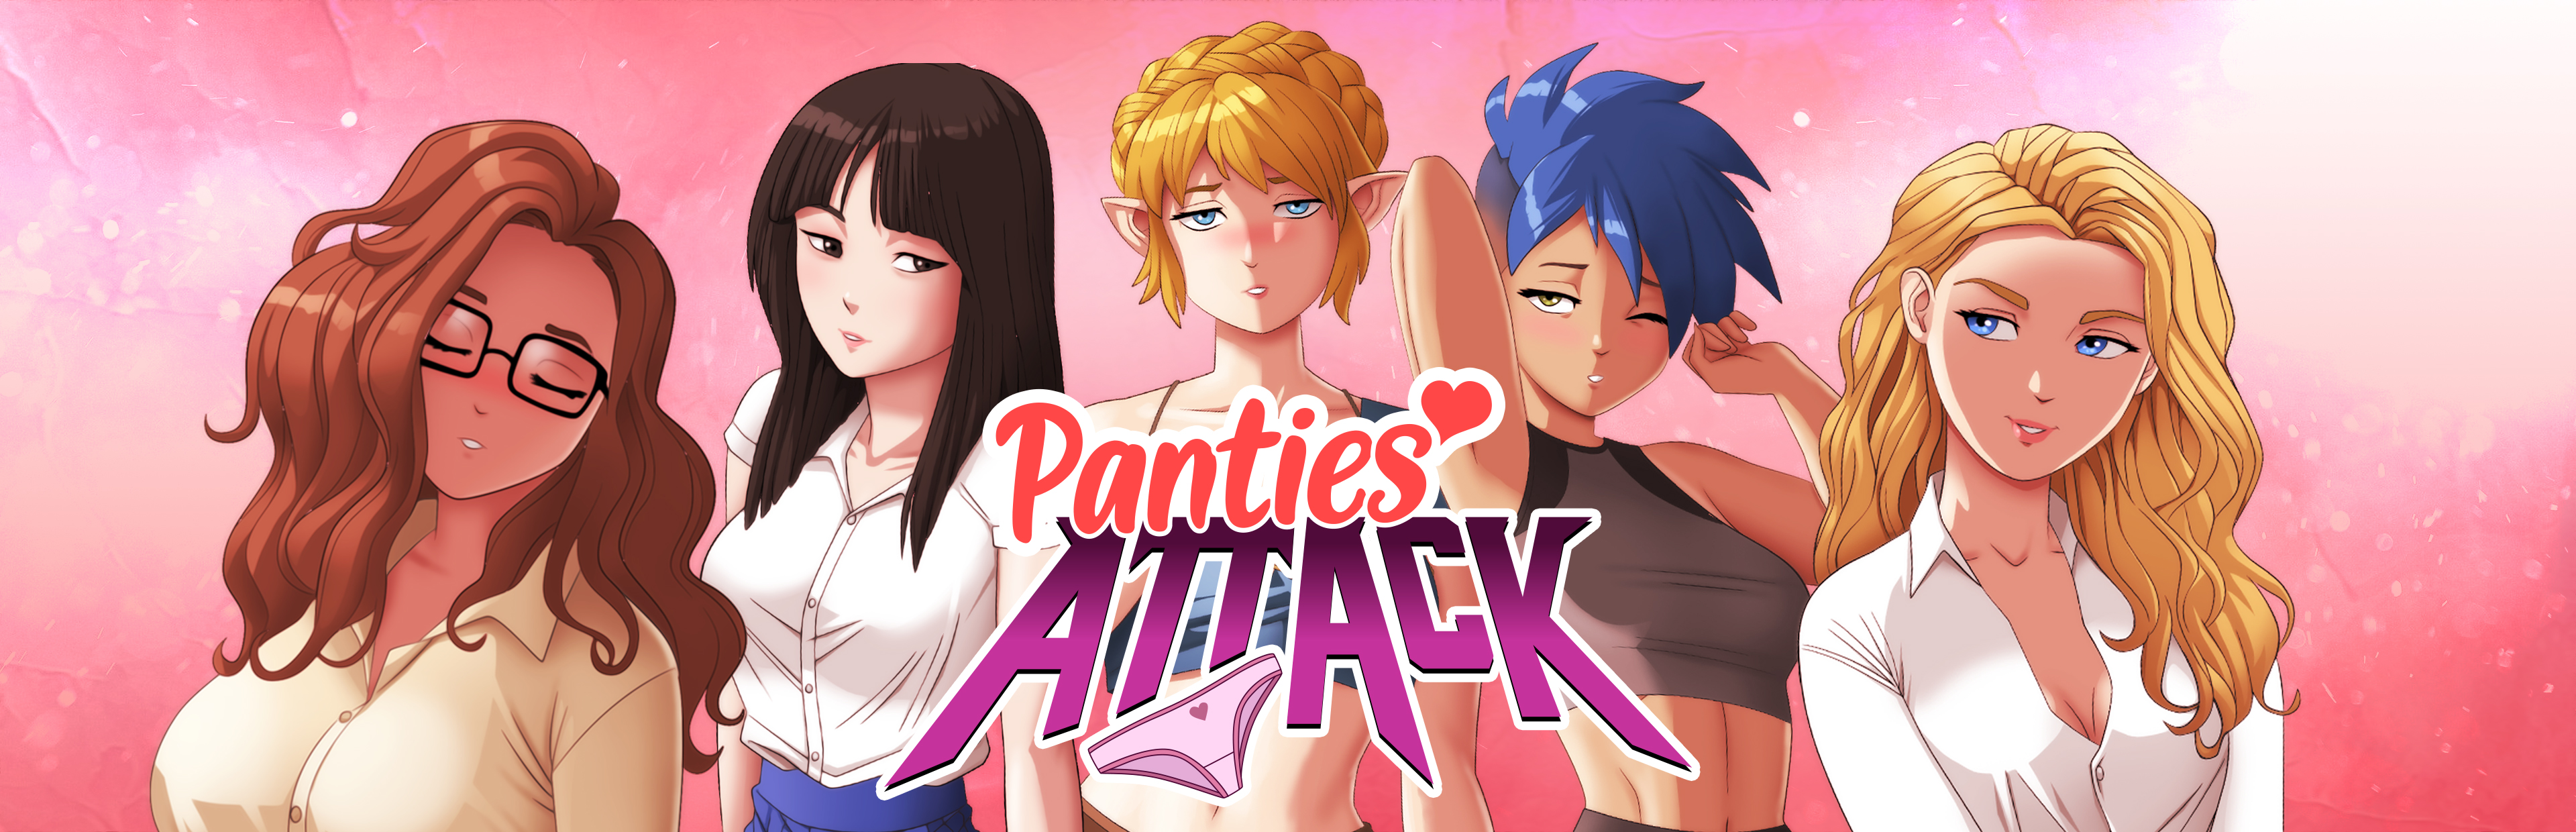 Panties Attack